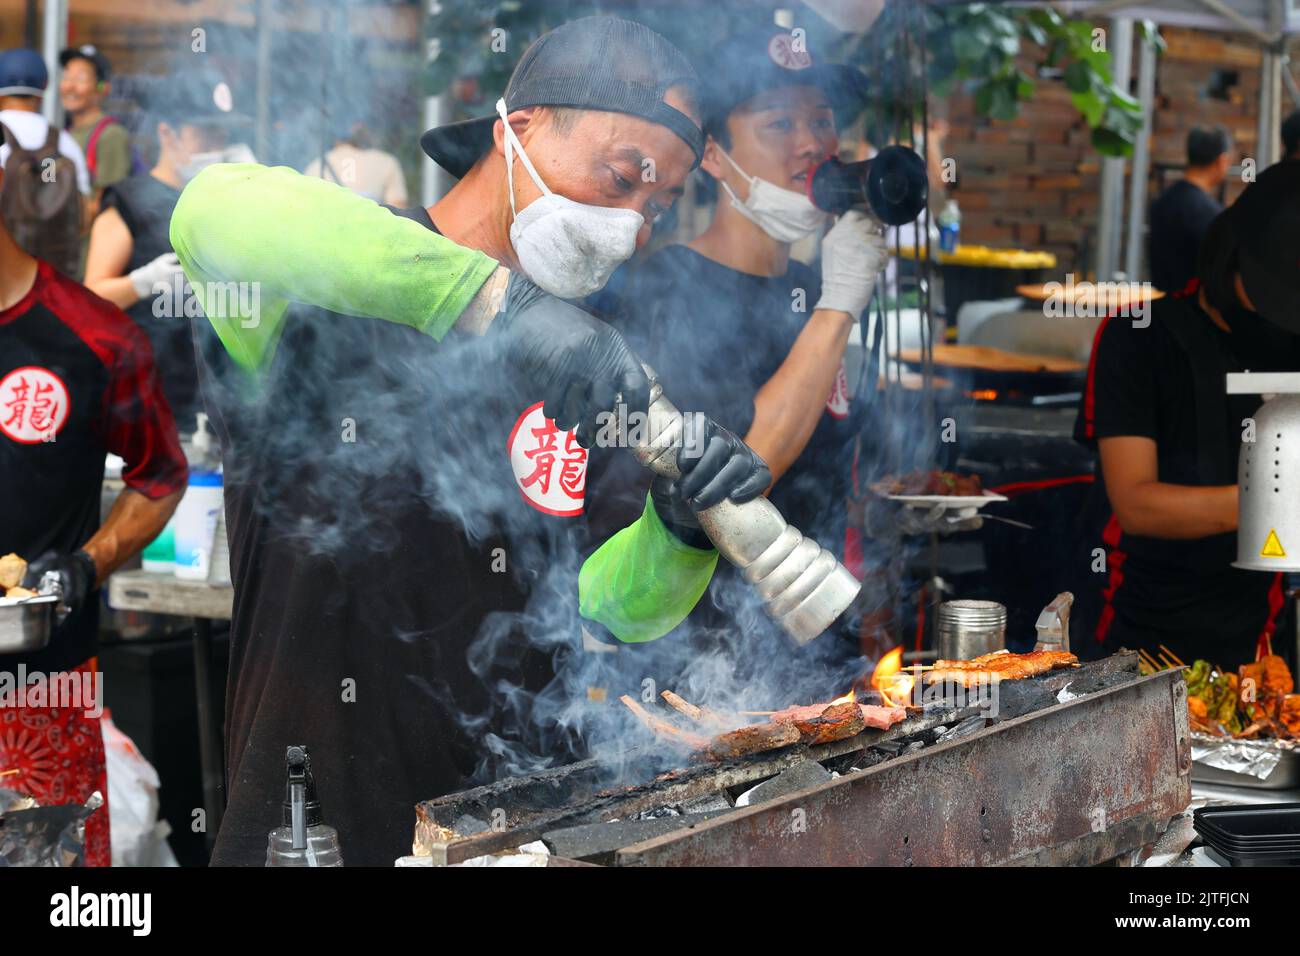 A Yakitori Tatsu chef prepares kushiyaki and yakitori on a konro with binchotan charcoal at a street fair, New York. skewers on a charcoal grill. Stock Photo